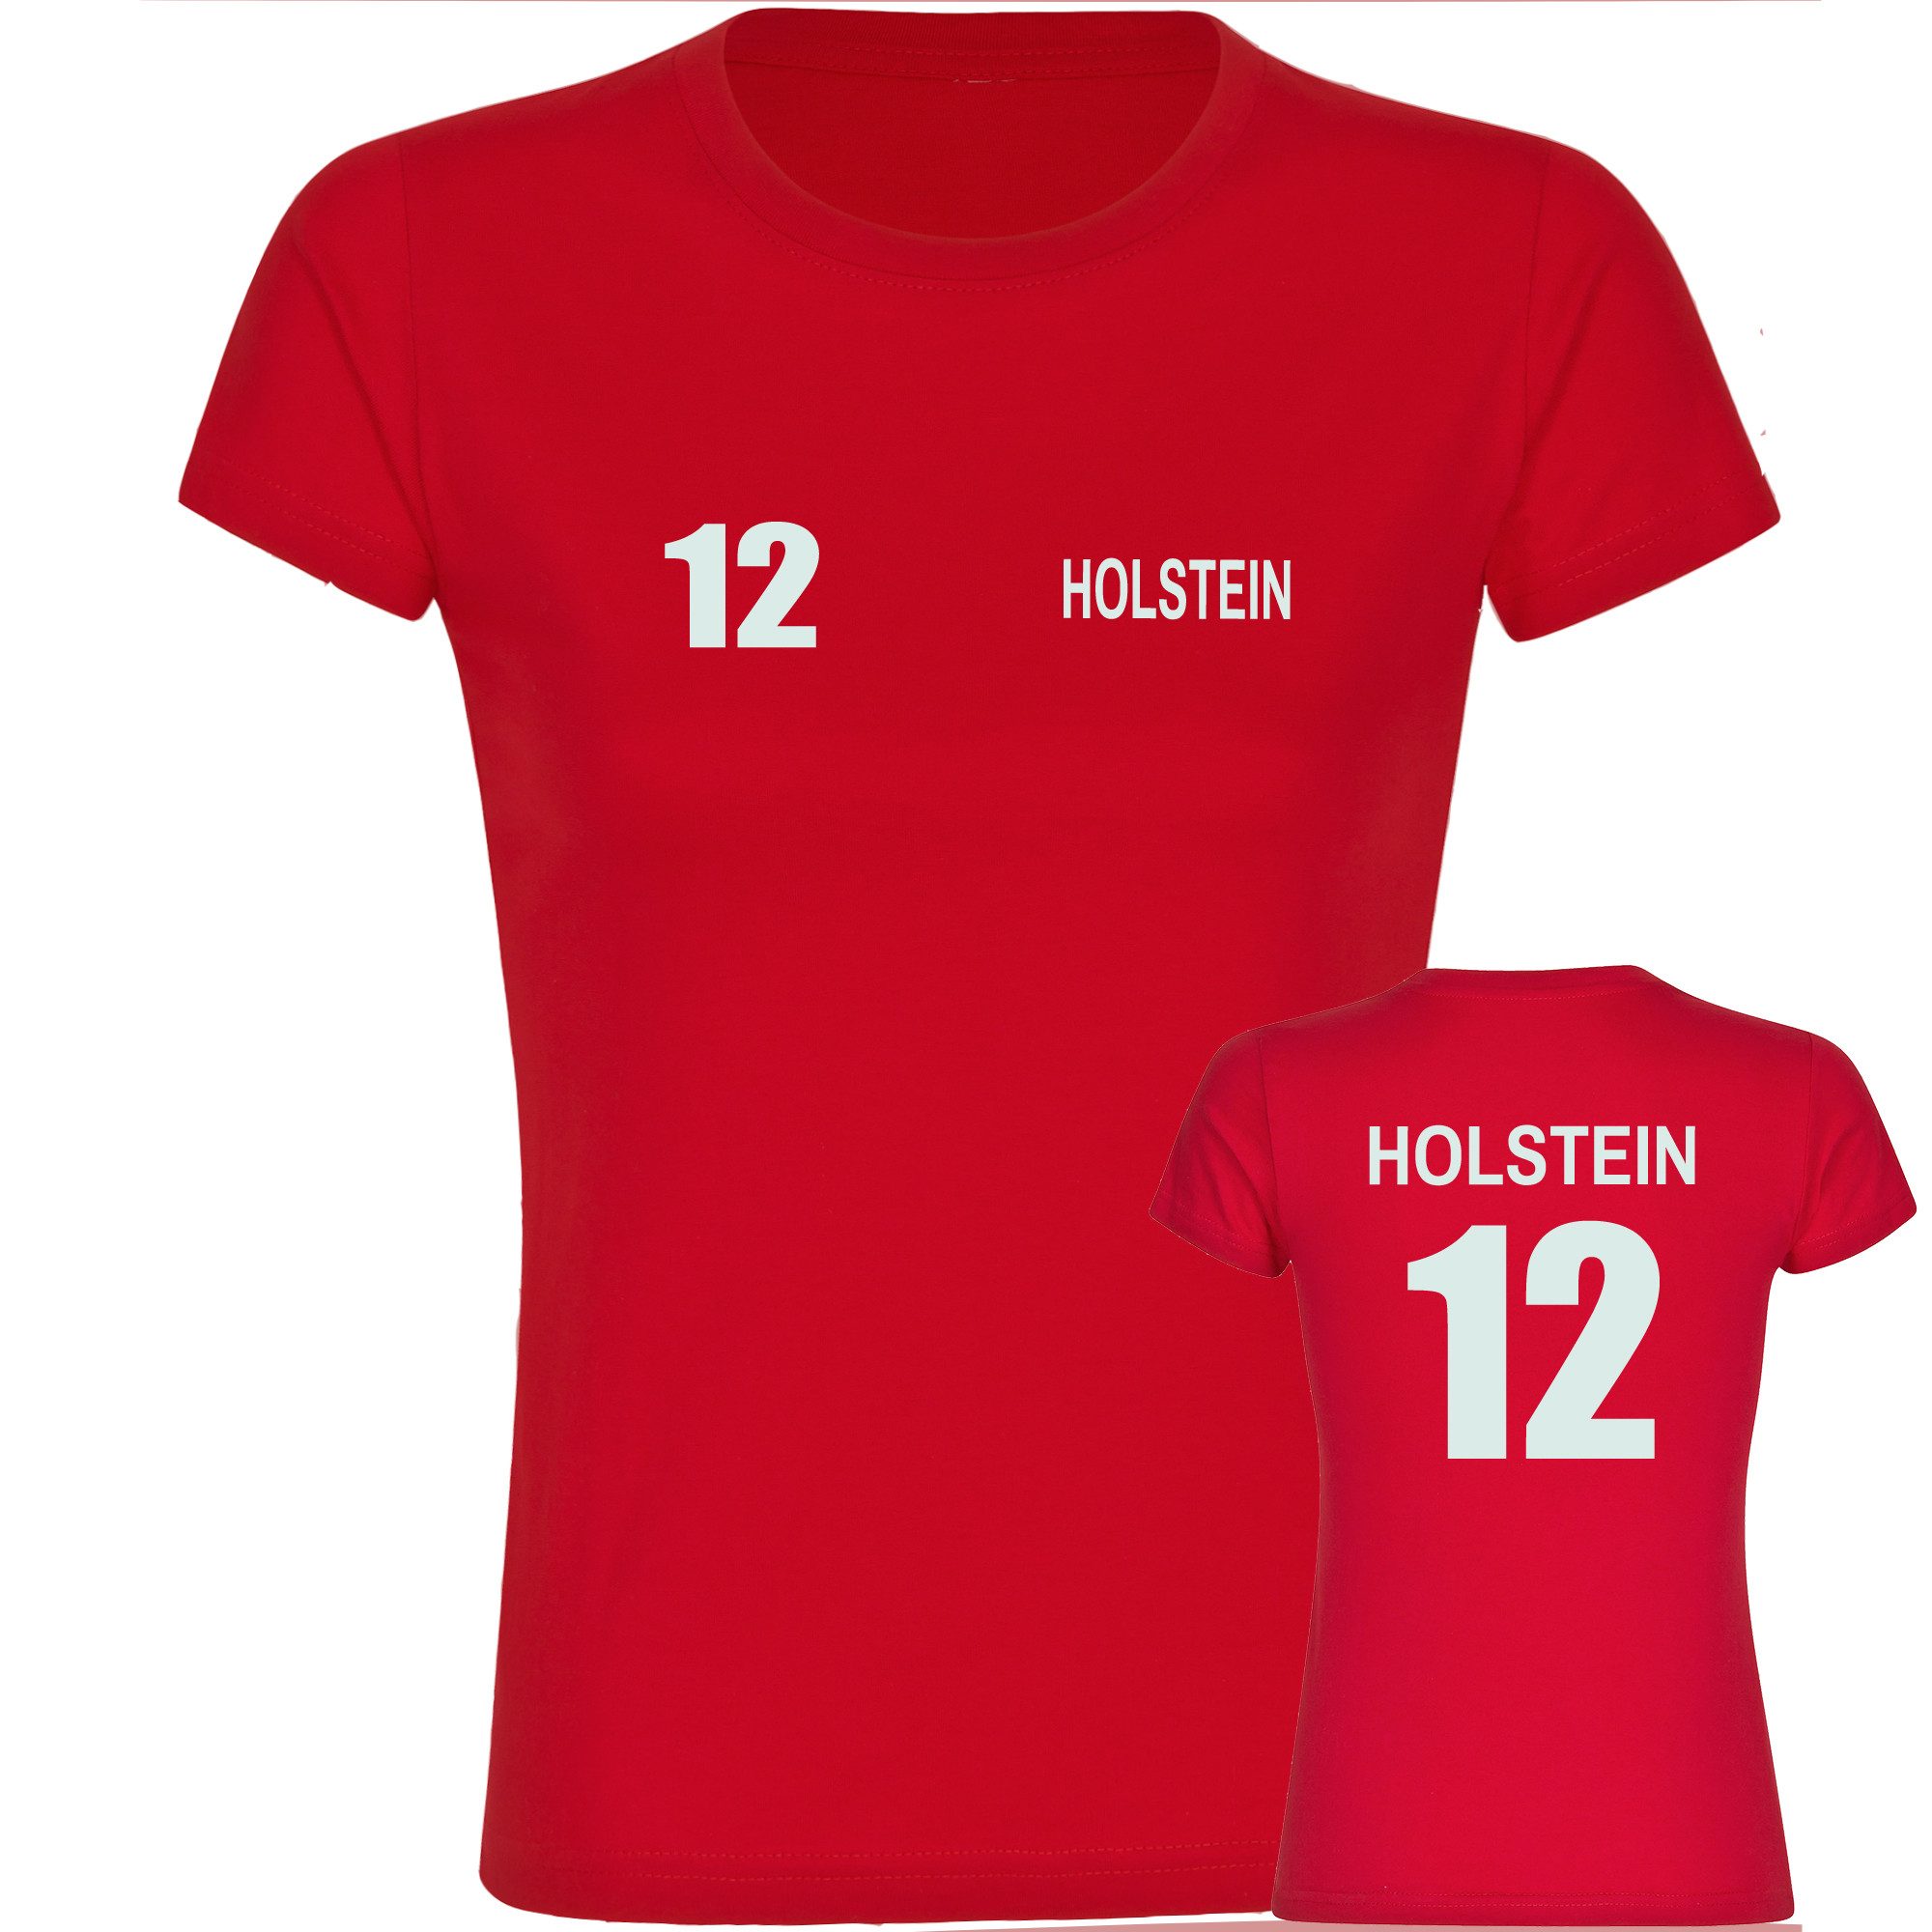 multifanshop T-Shirt Damen Holstein - Trikot 12 - Frauen